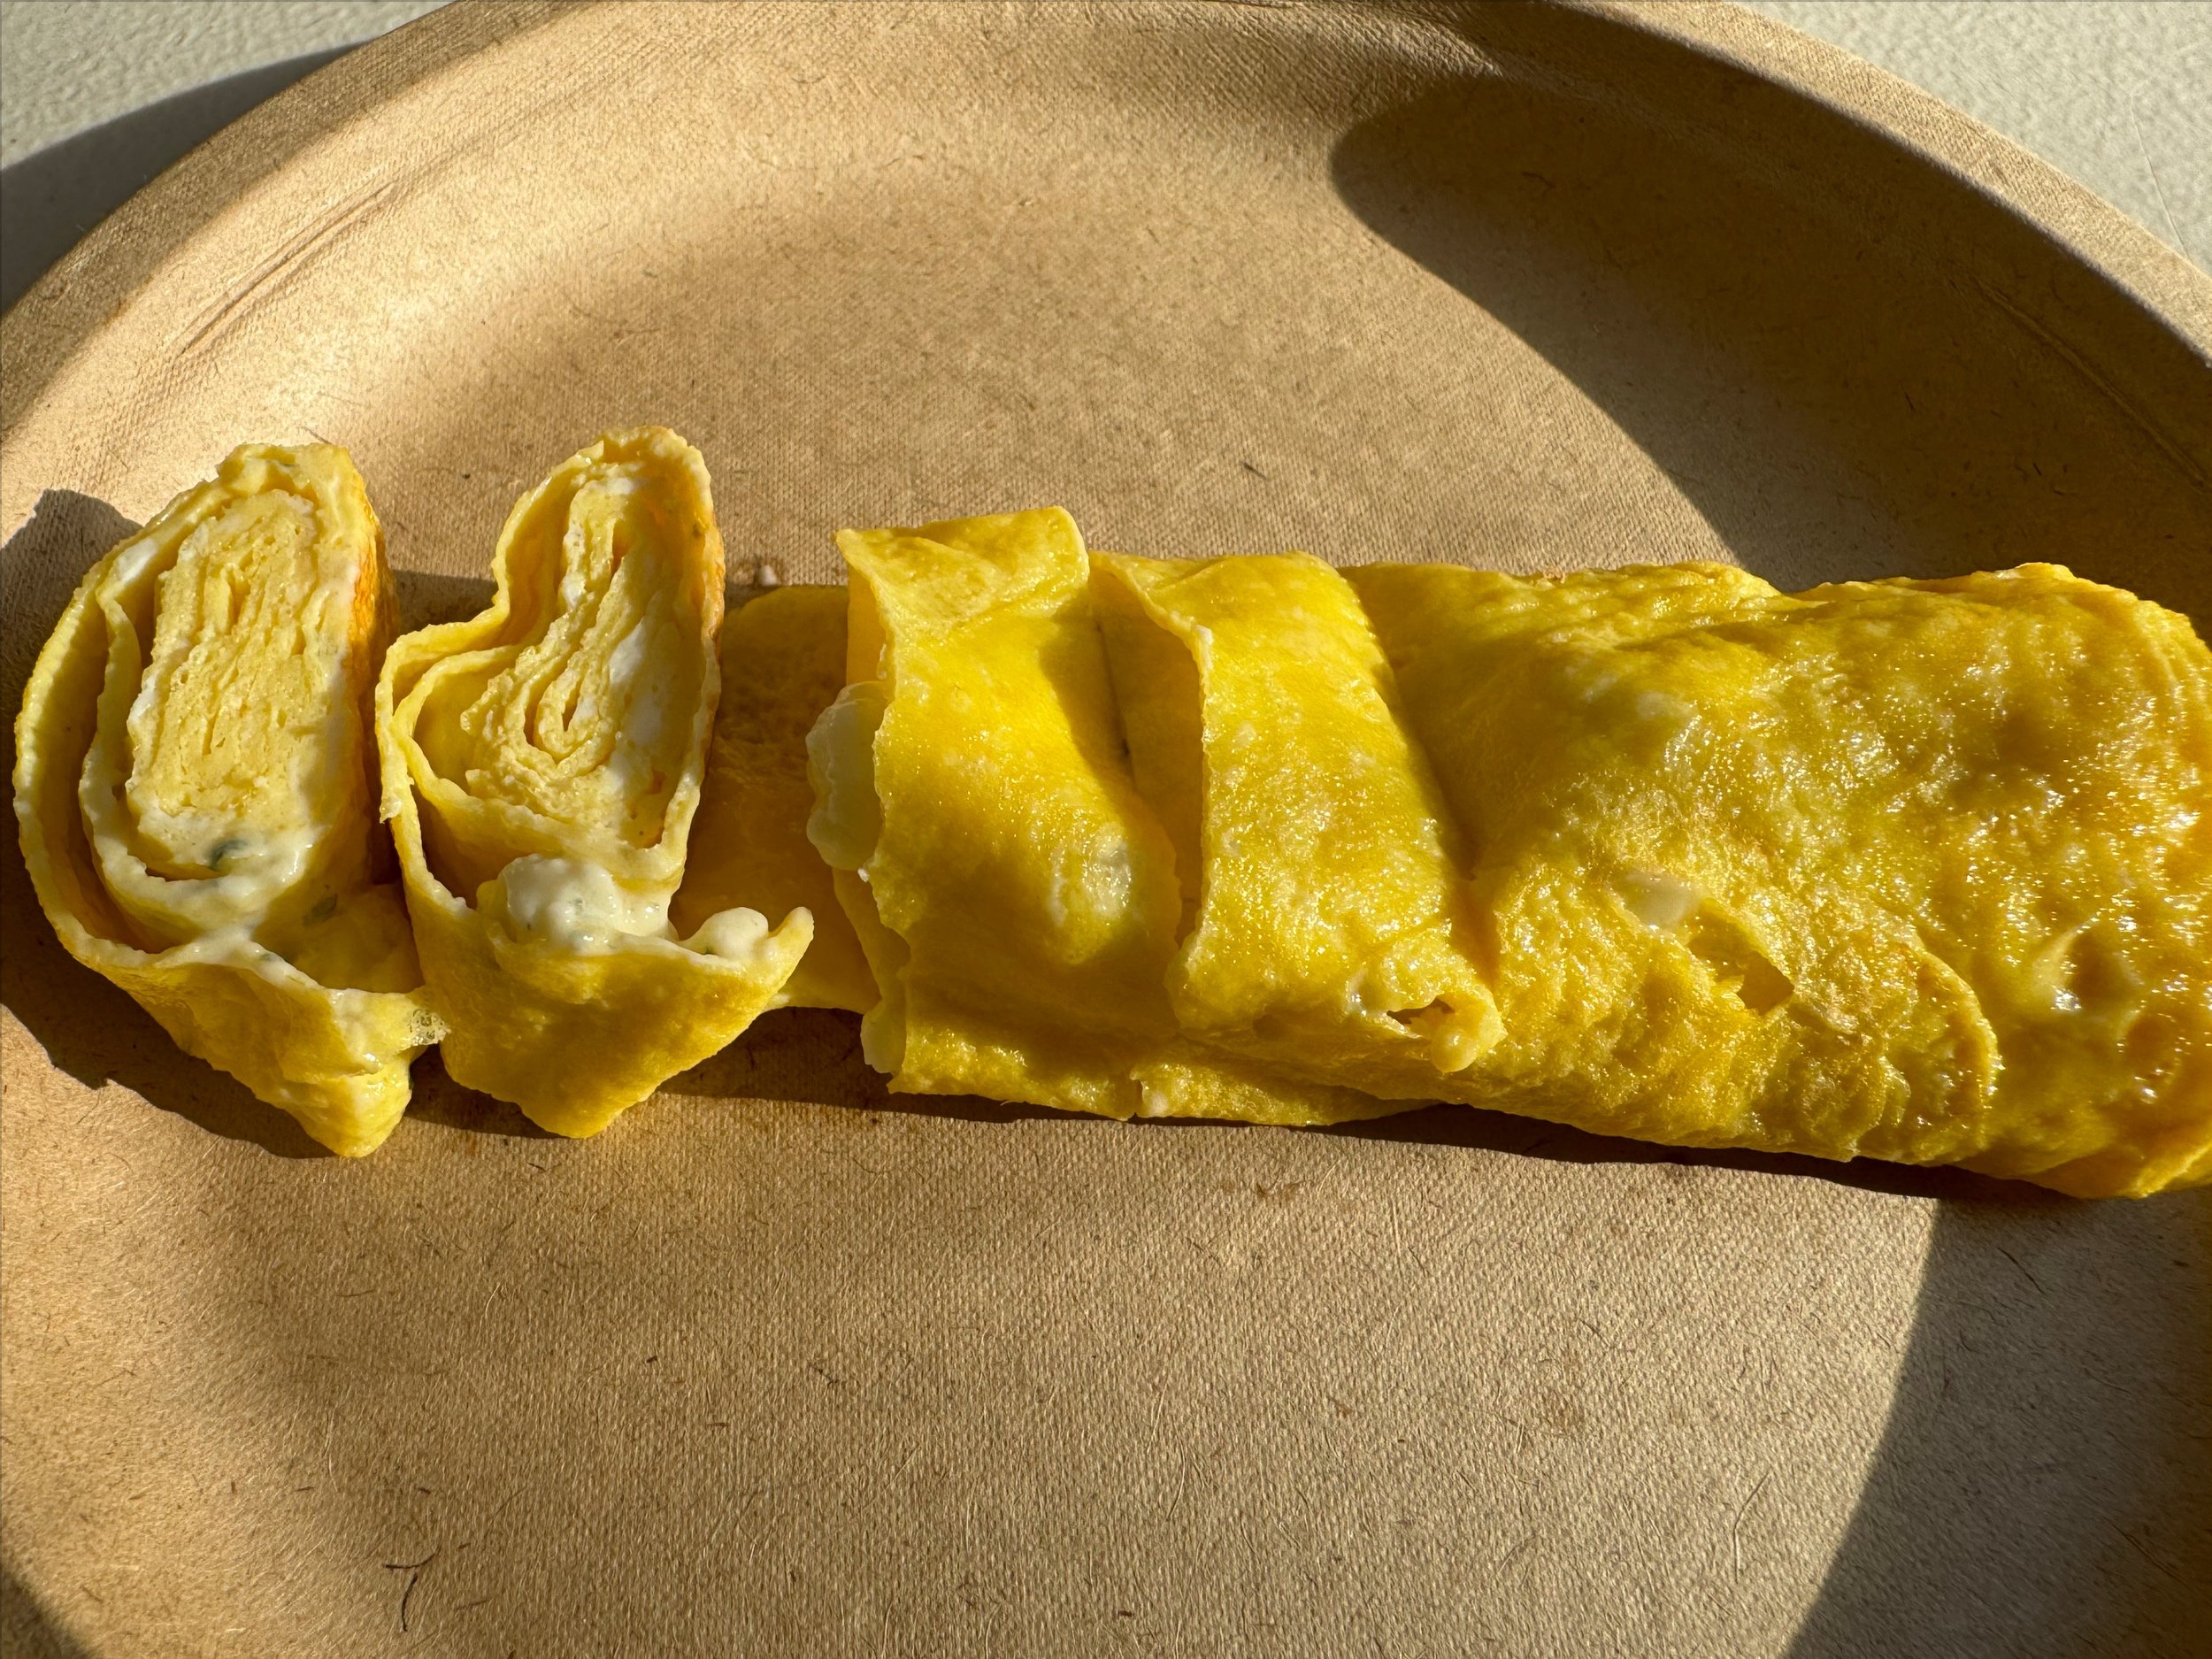 $4 Zero-Carb Tamagoyaki (rolled omelette)